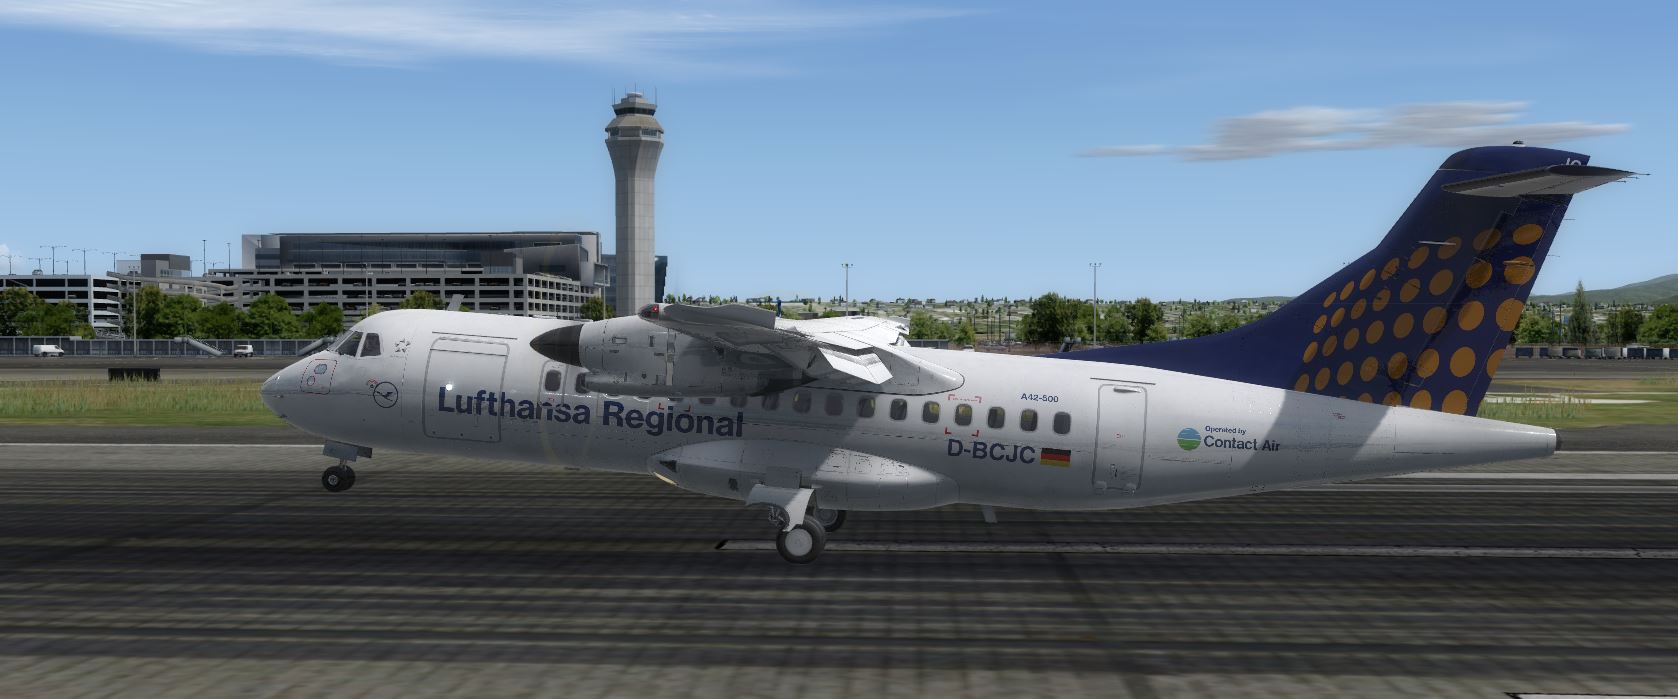 ATR42-500 Lufthansa-5877 